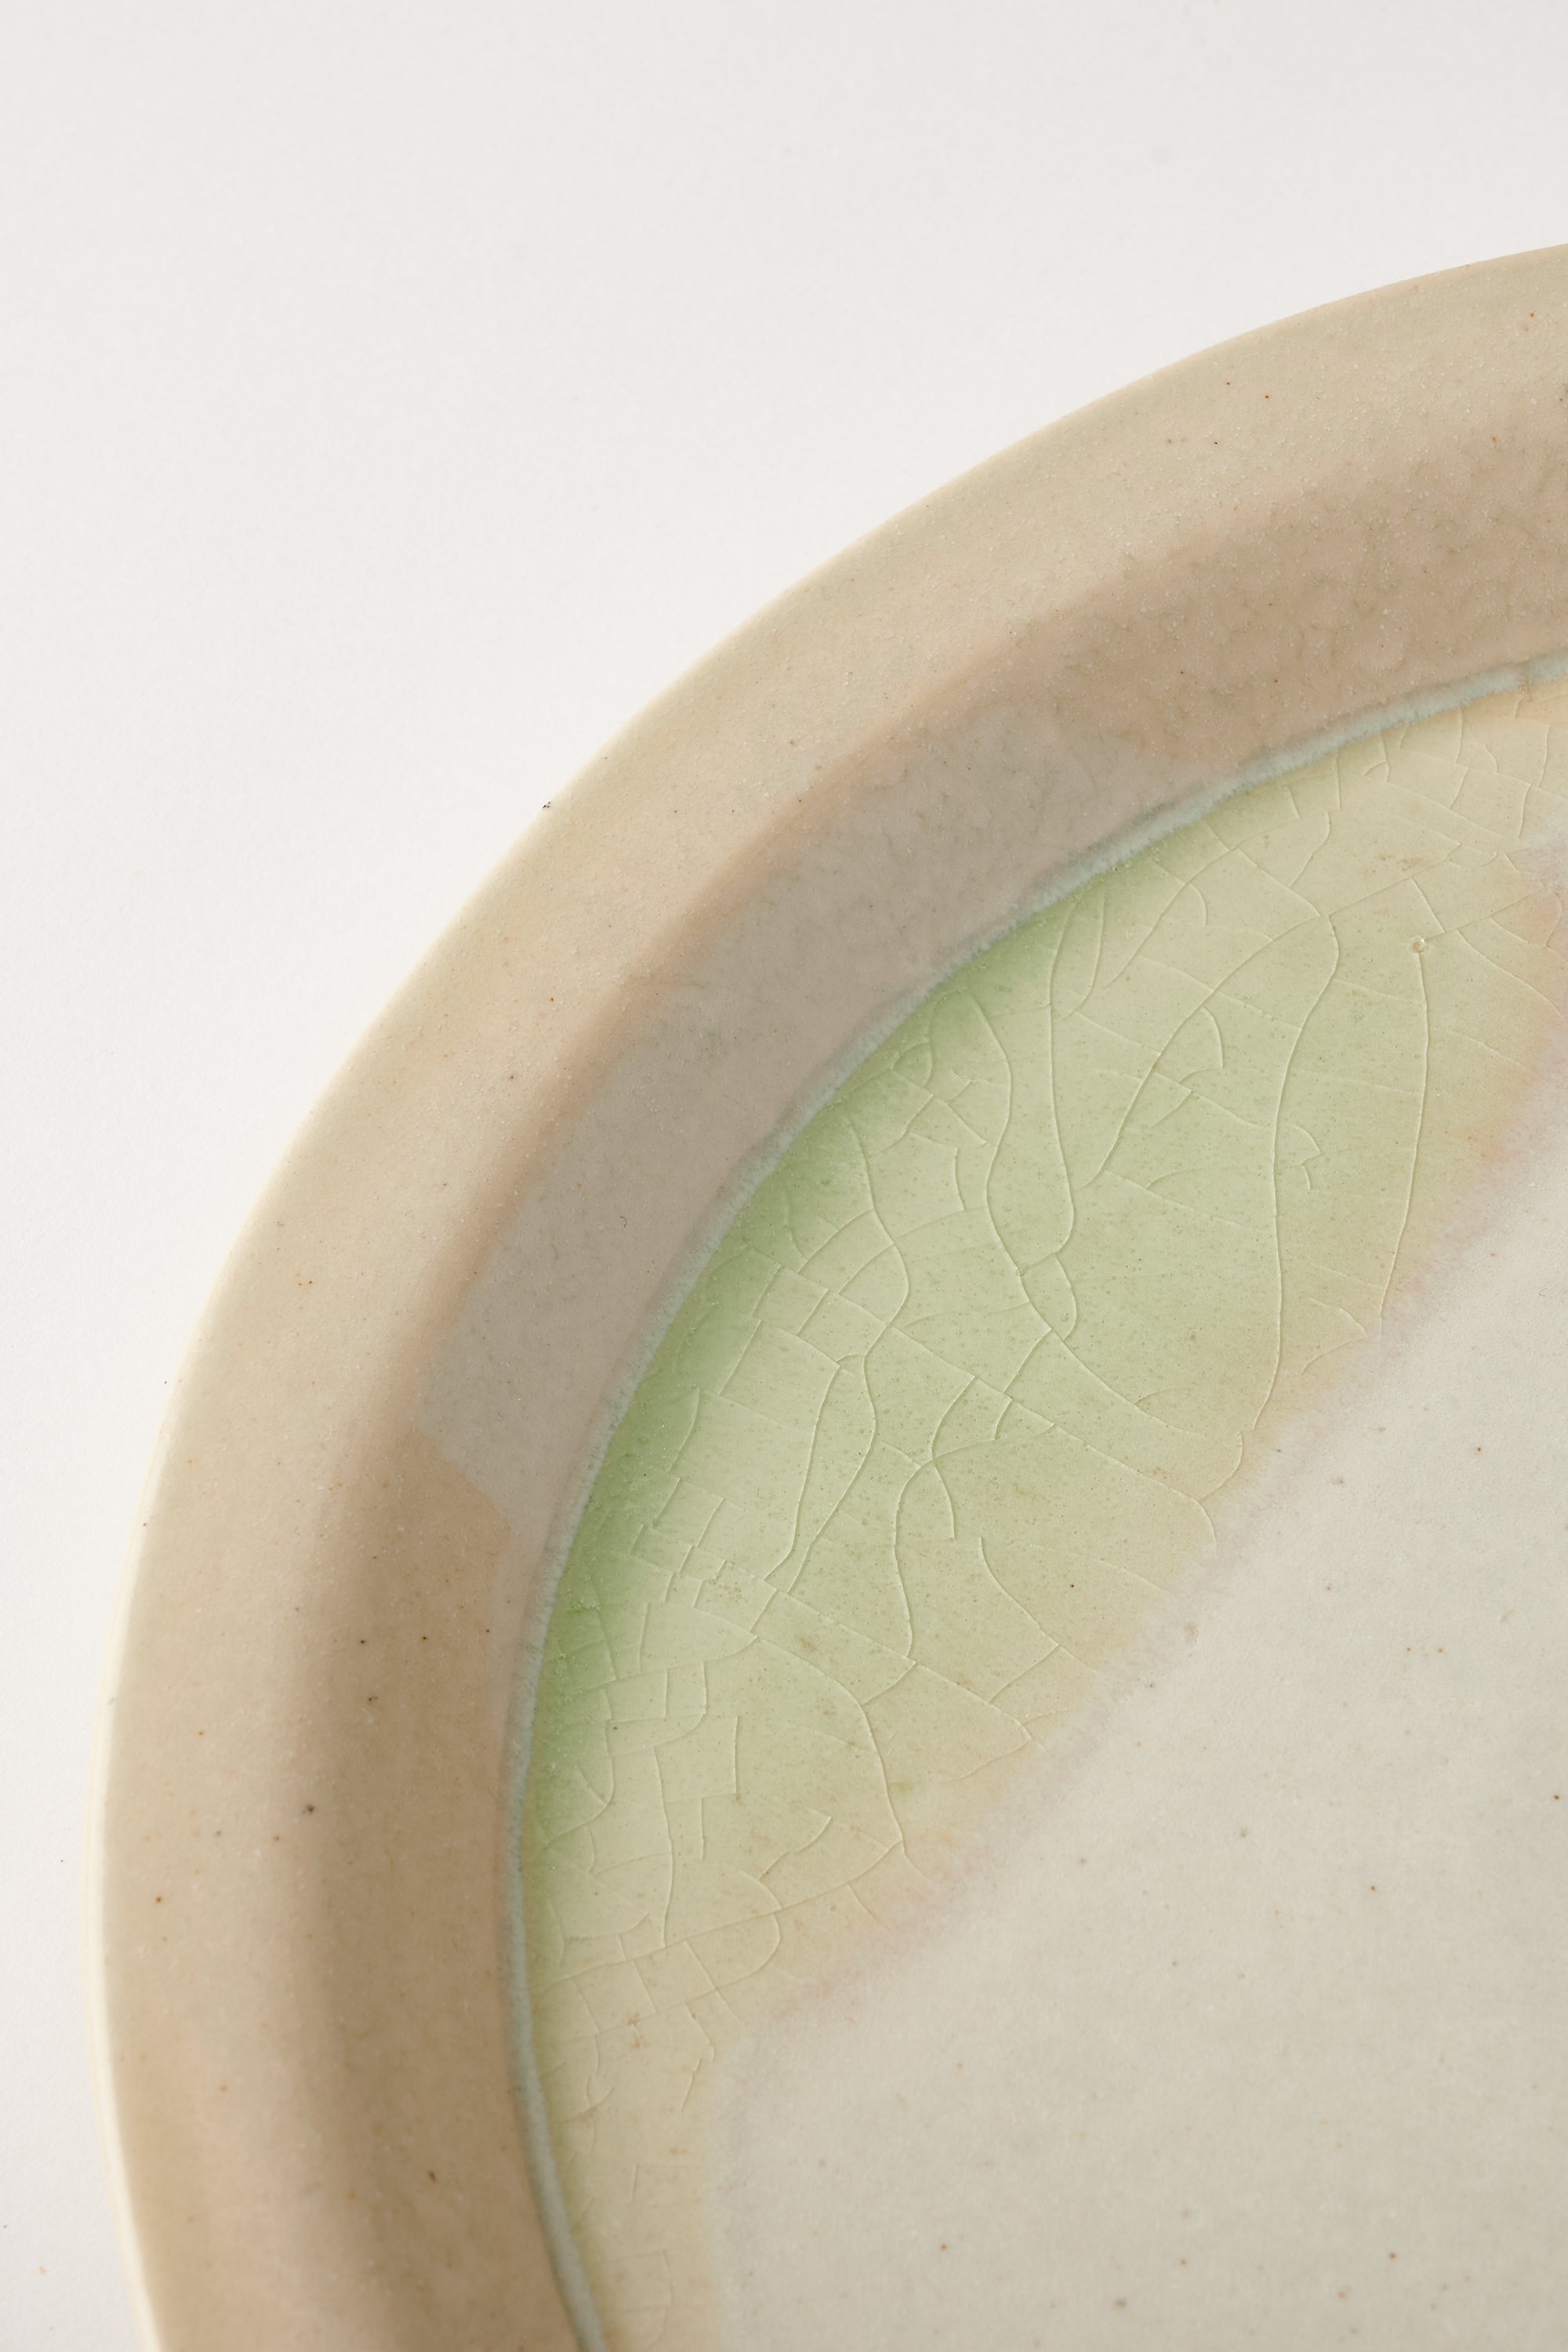 Anastasia’s Ashes Ceramic Dinner Plate with Cream & Sage Overglaze